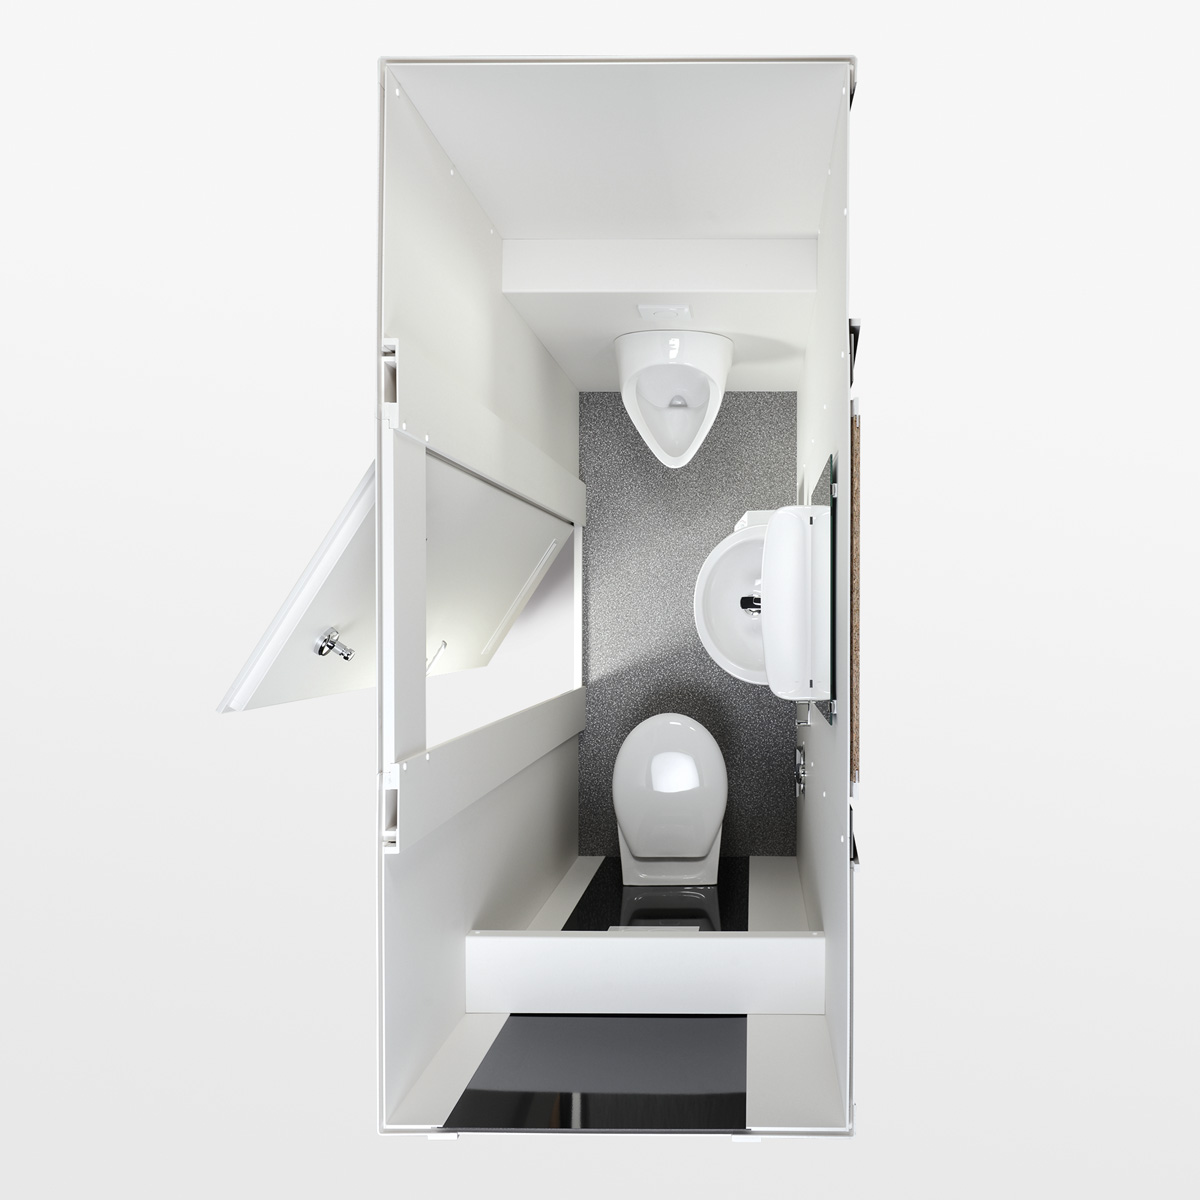 Prefabricated bathroom UNIVERSAL